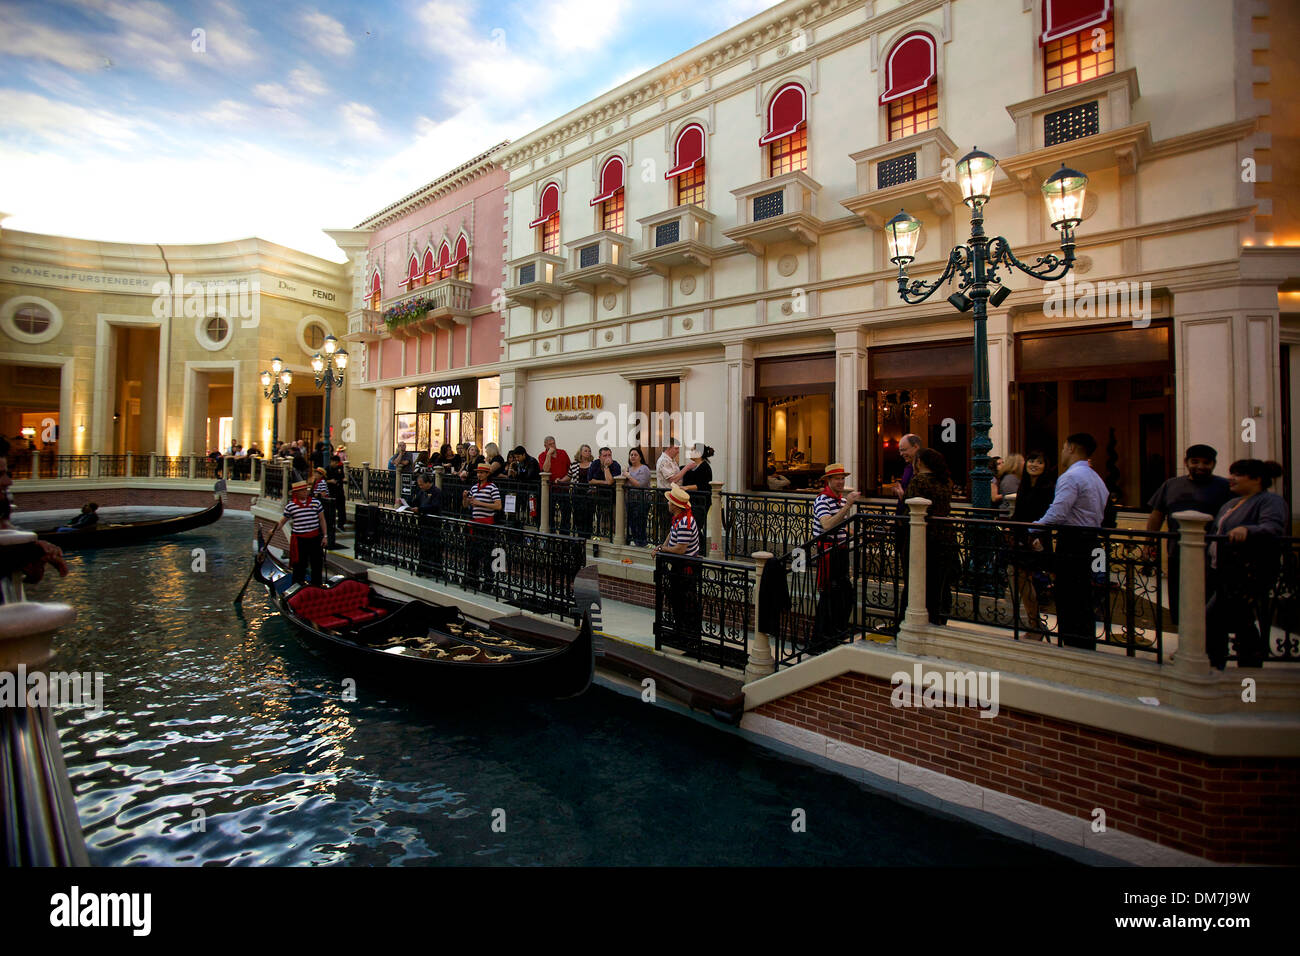 808 Venetian Las Vegas Shopping Images, Stock Photos, 3D objects, & Vectors